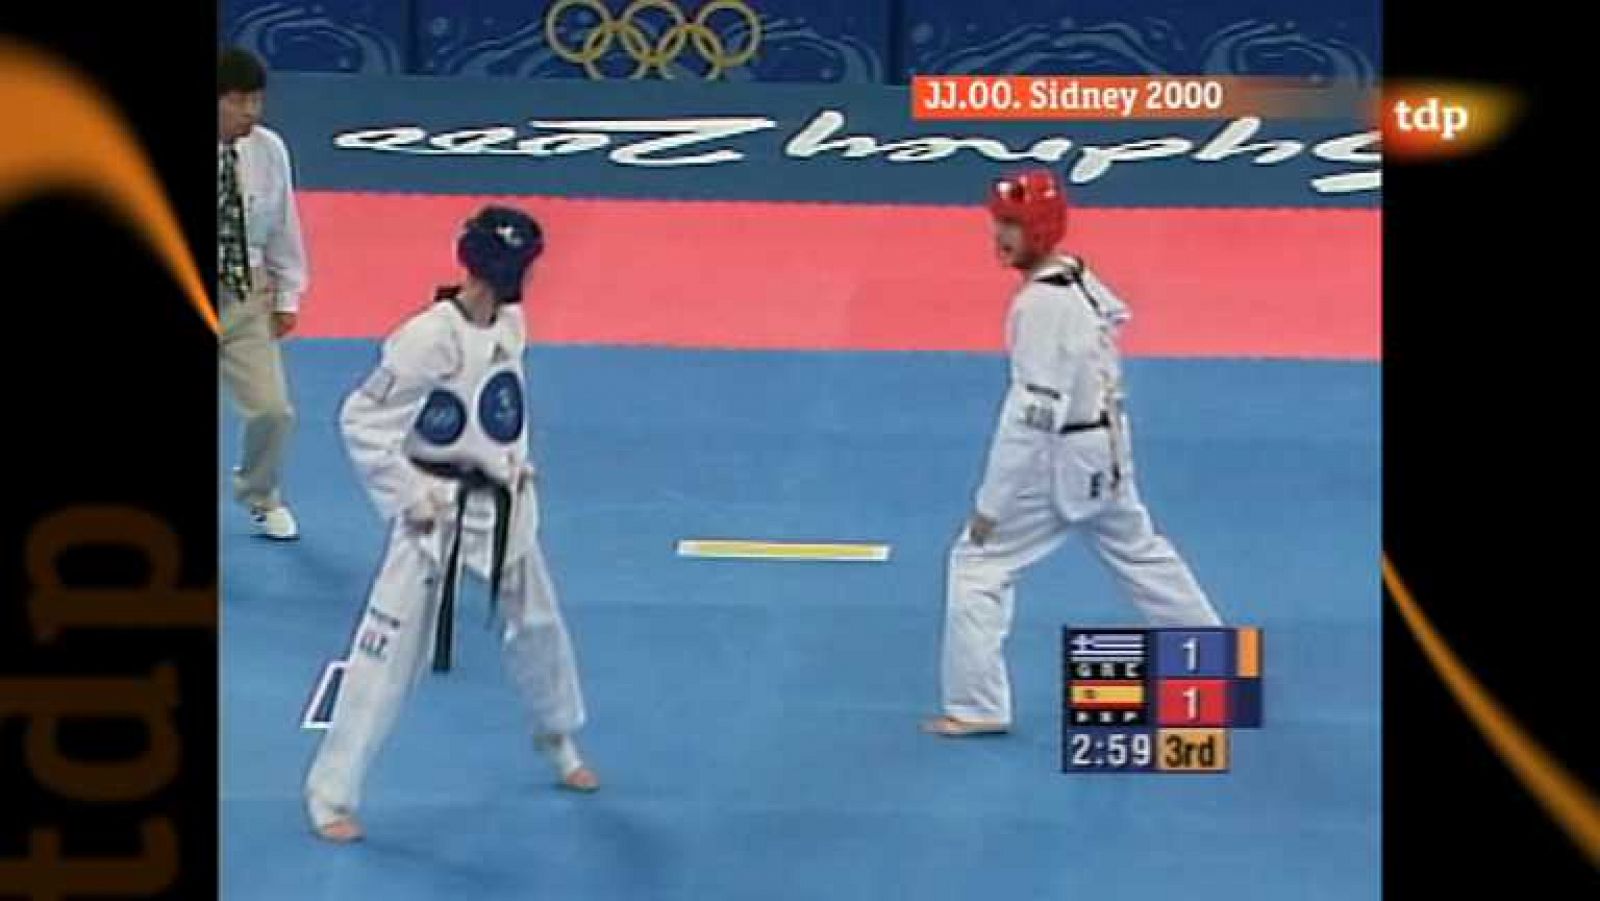 Londres en juego - Sidney 2000: Taekwondo